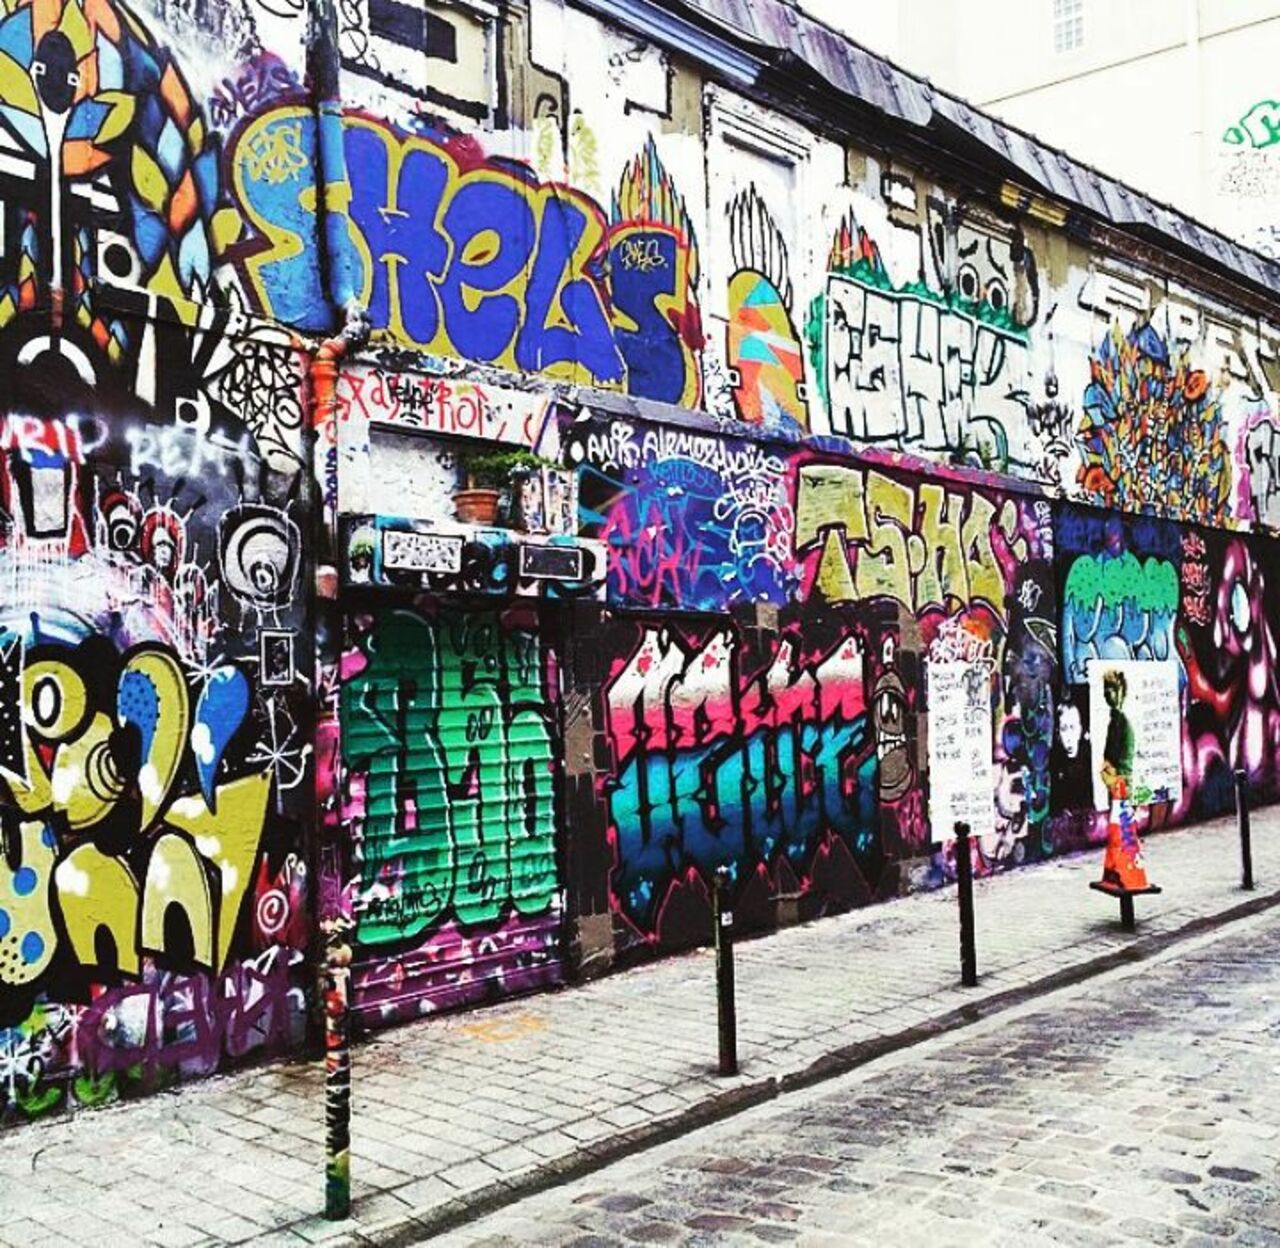 #Paris #graffiti photo by @parada_h http://ift.tt/1LVlcjt #StreetArt https://t.co/sRw6rBulzI